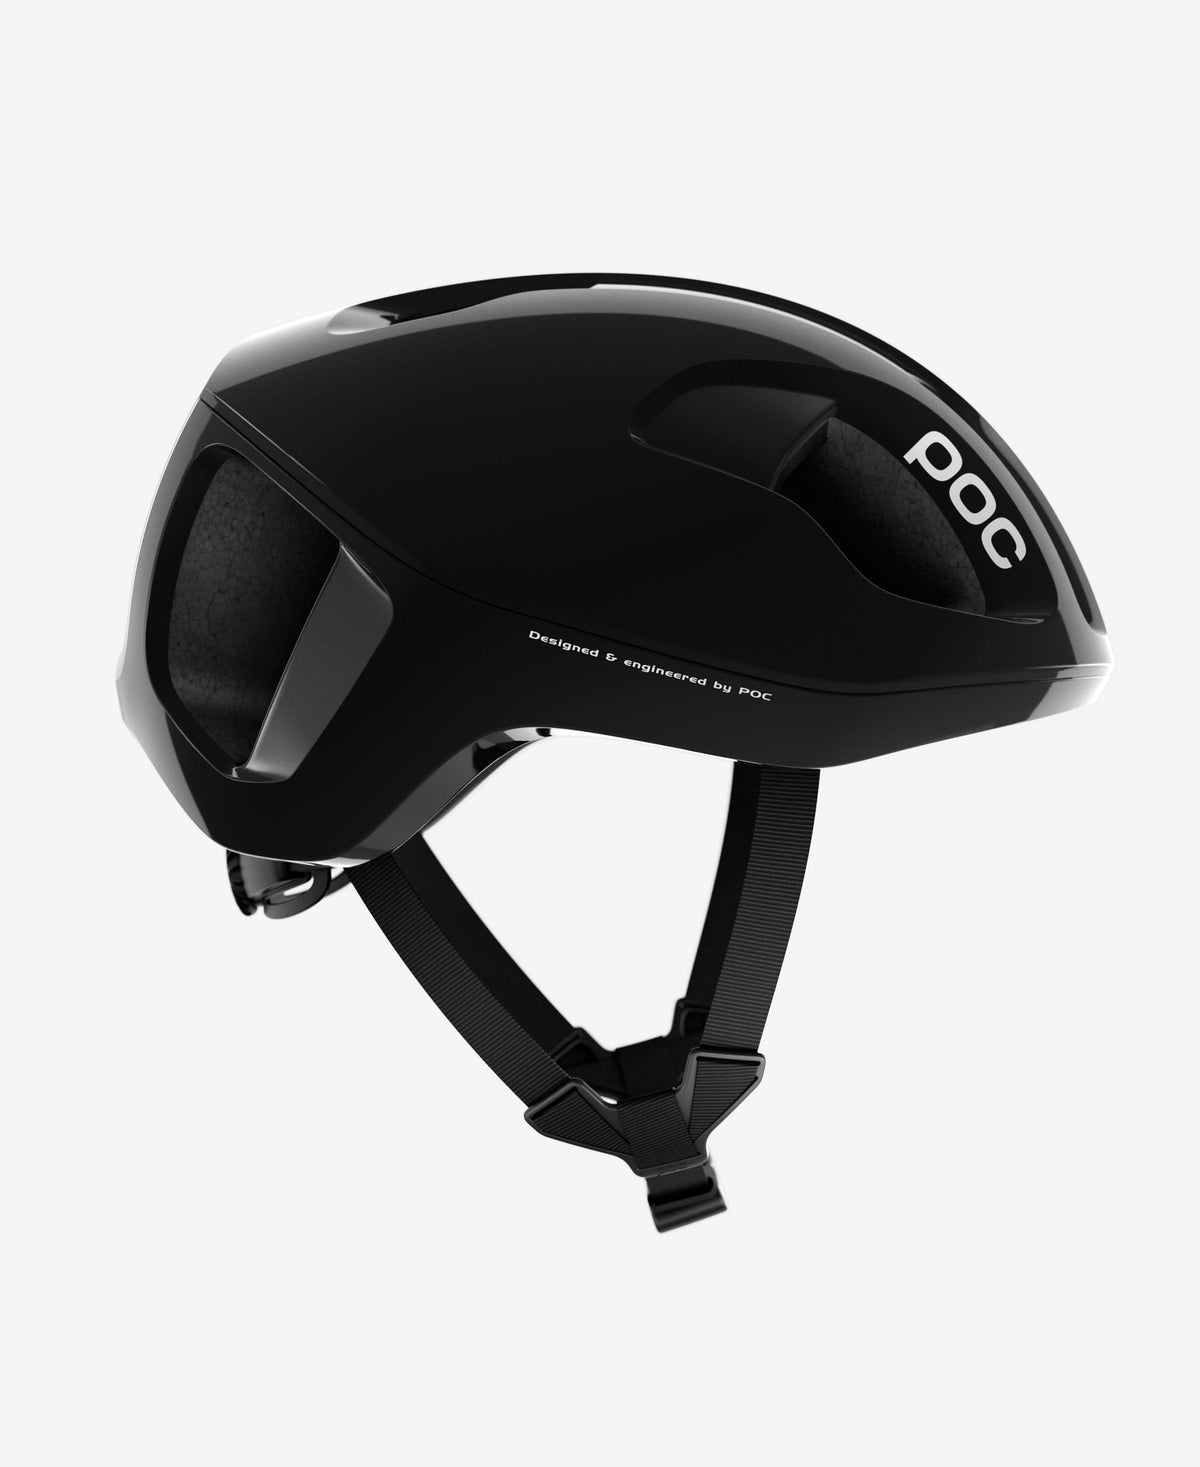 POC Ventral SPIN Helmet, 2019 - Cycle Closet